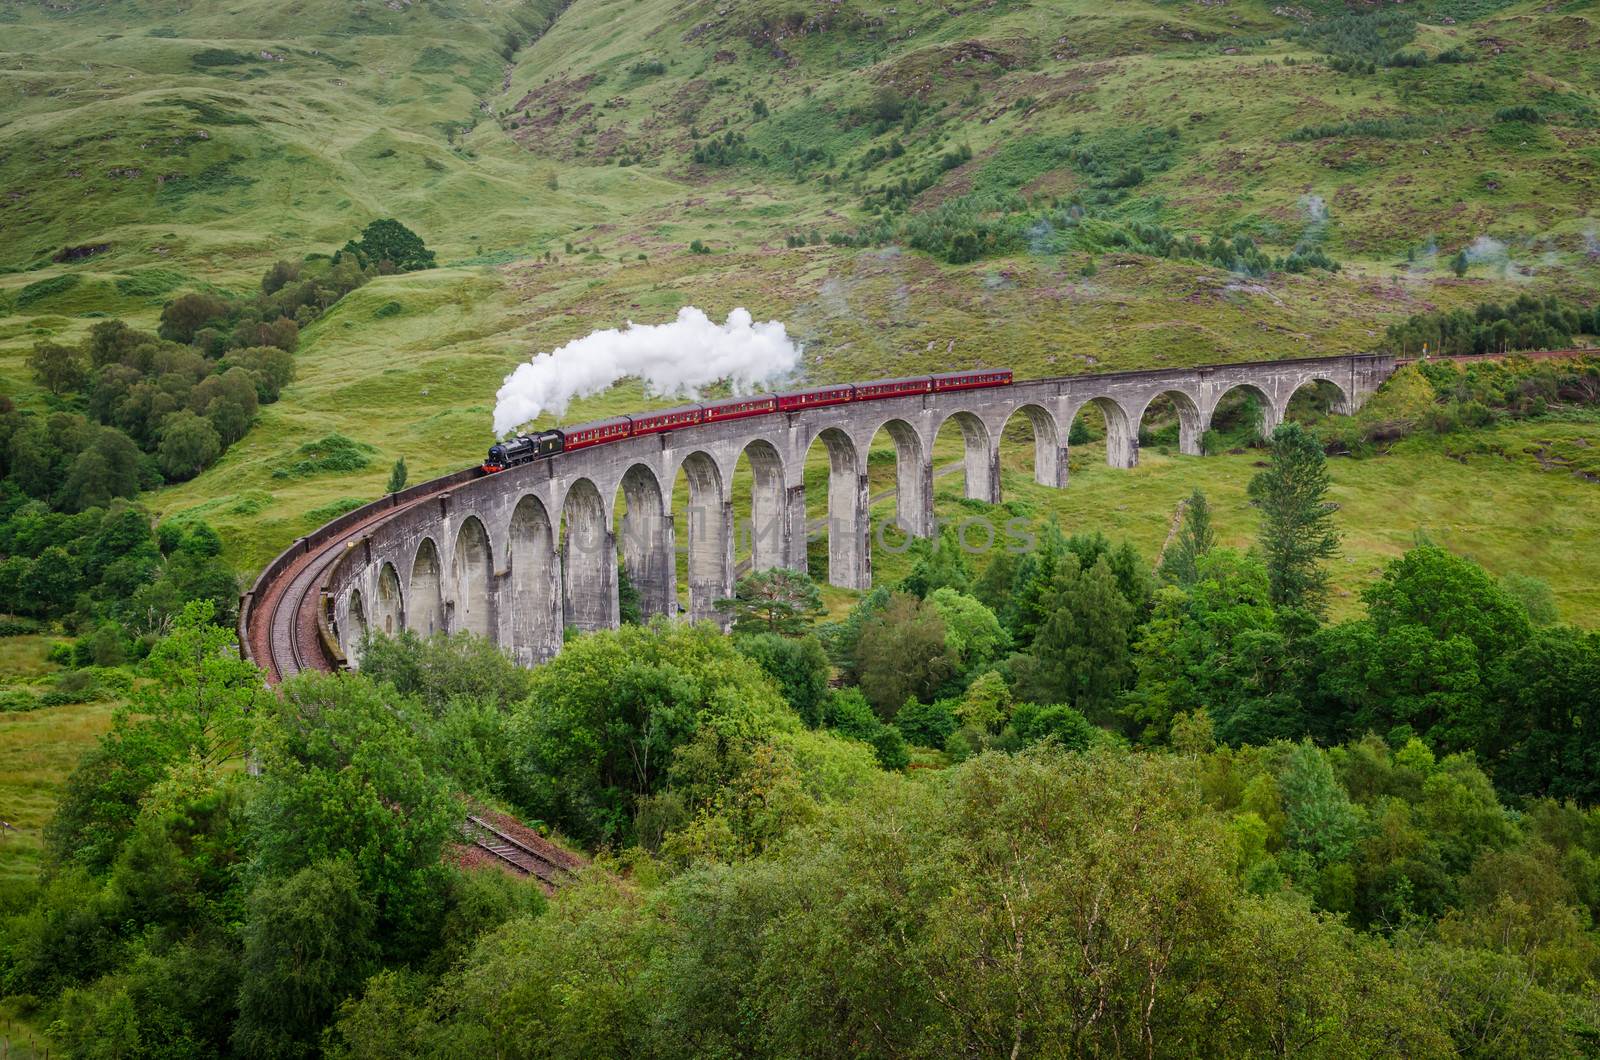 Steam train on a famous Glenfinnan viaduct, Scotland by martinm303